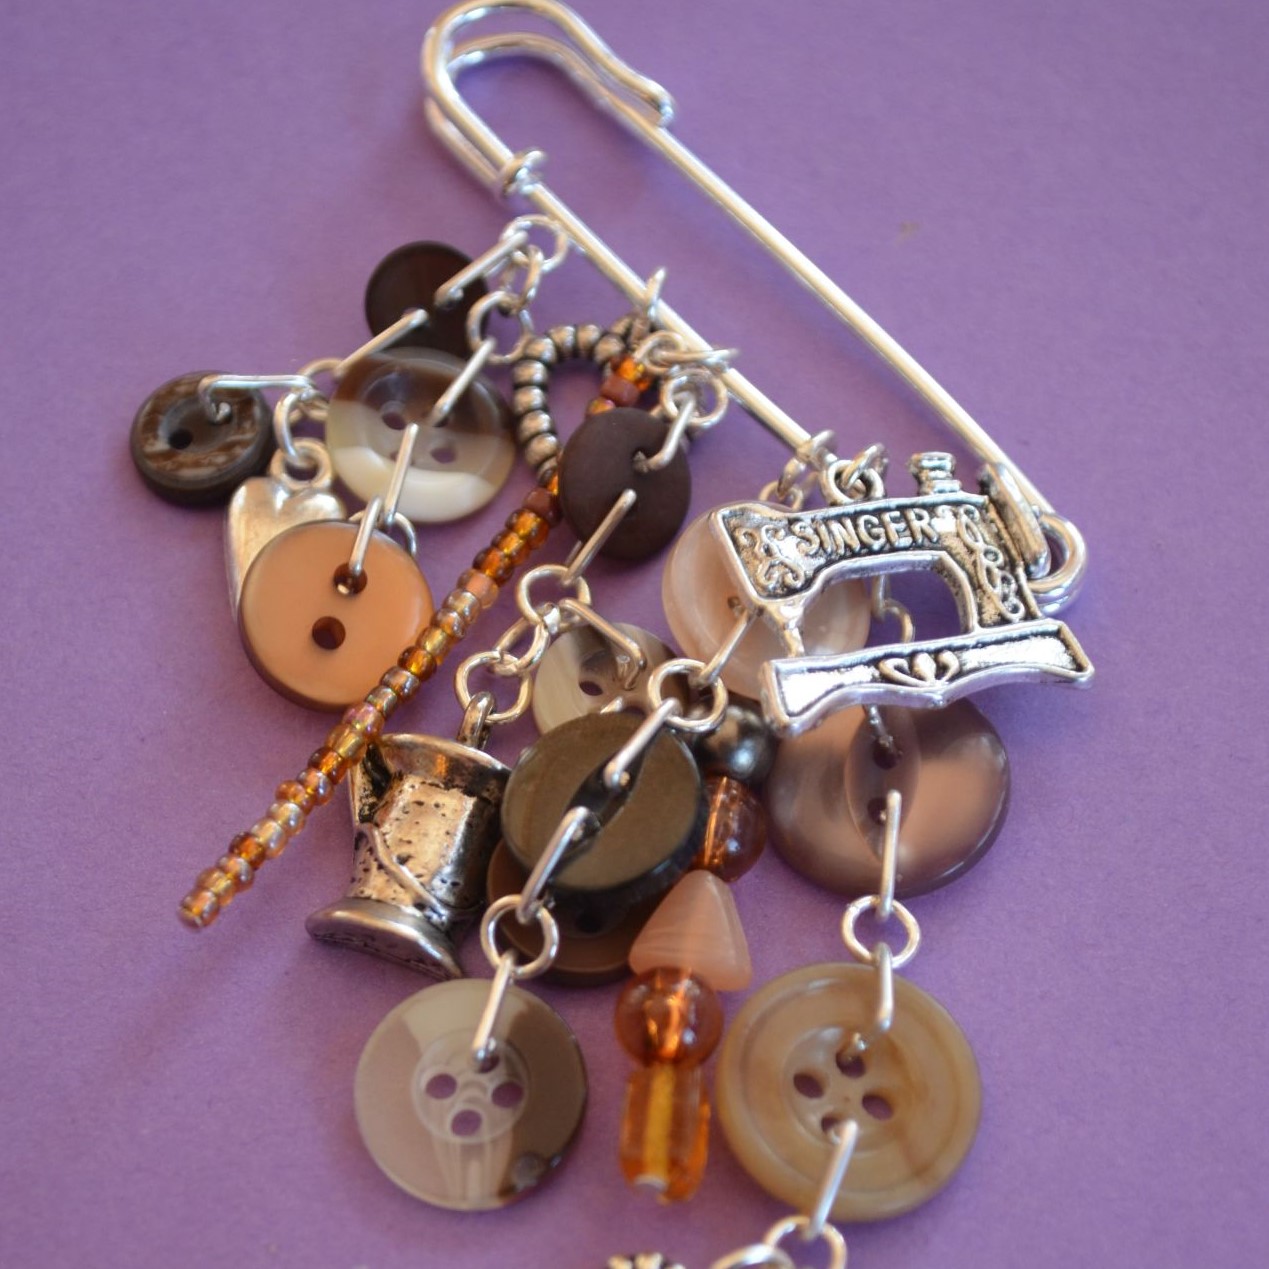 Sewing Machine Cluster Charm Kilt Pin Brooch